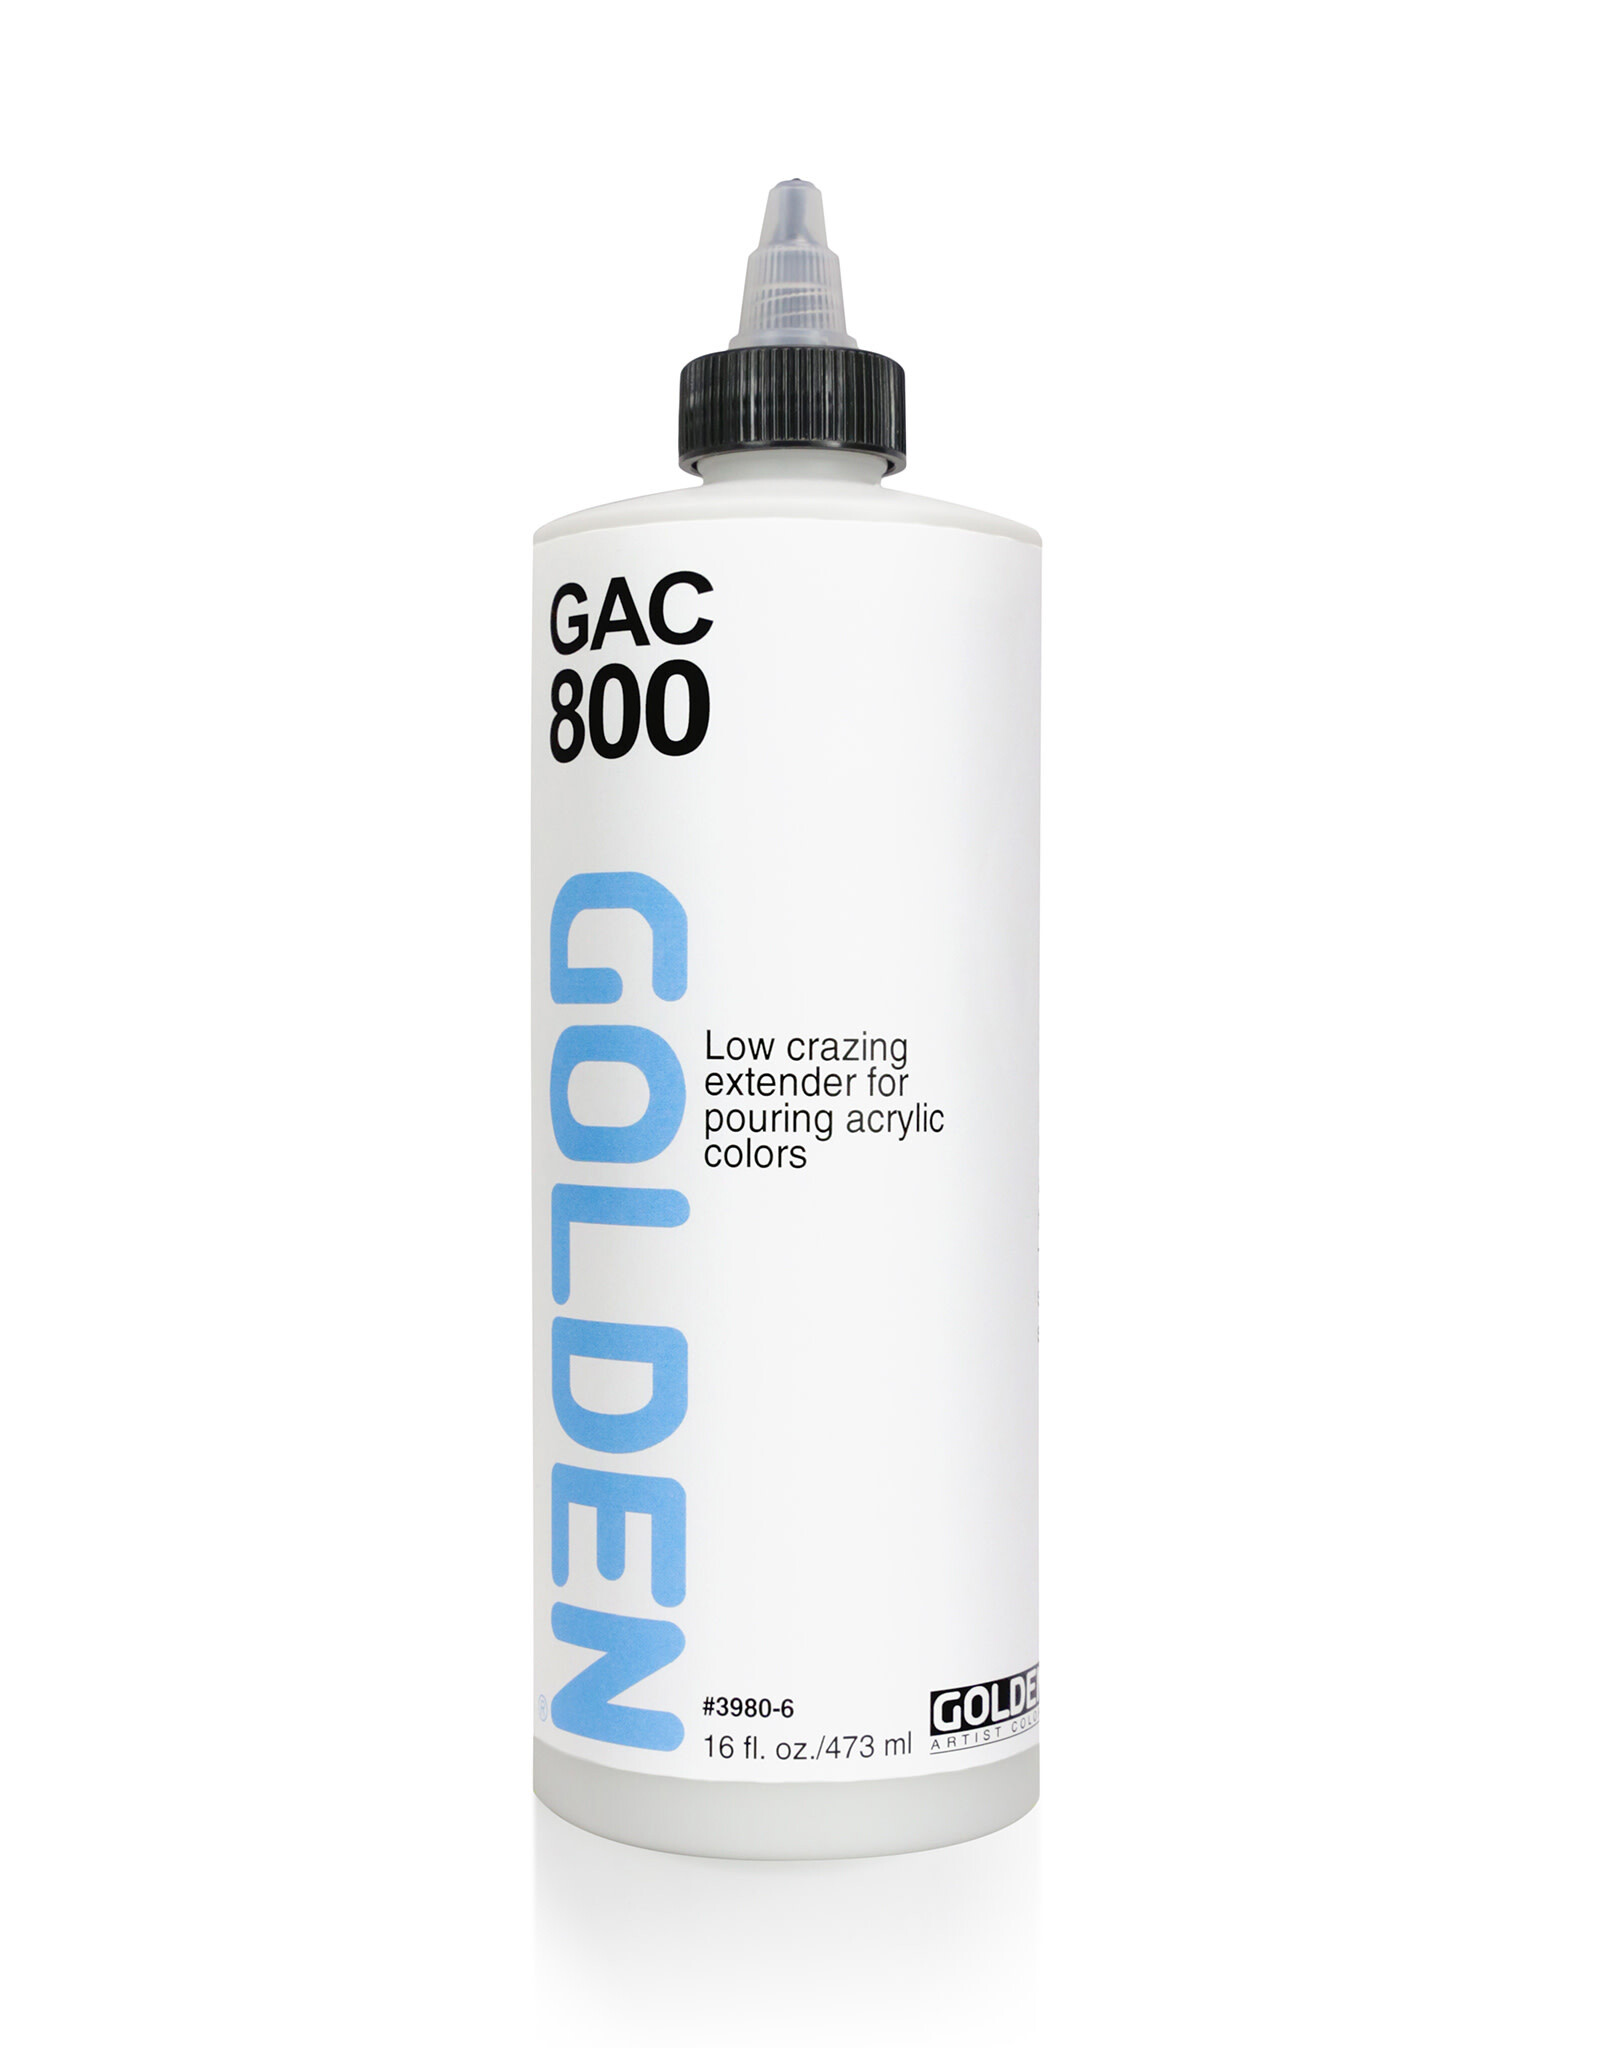 Golden Golden GAC 800 Extender for Acrylic Colors, 16oz